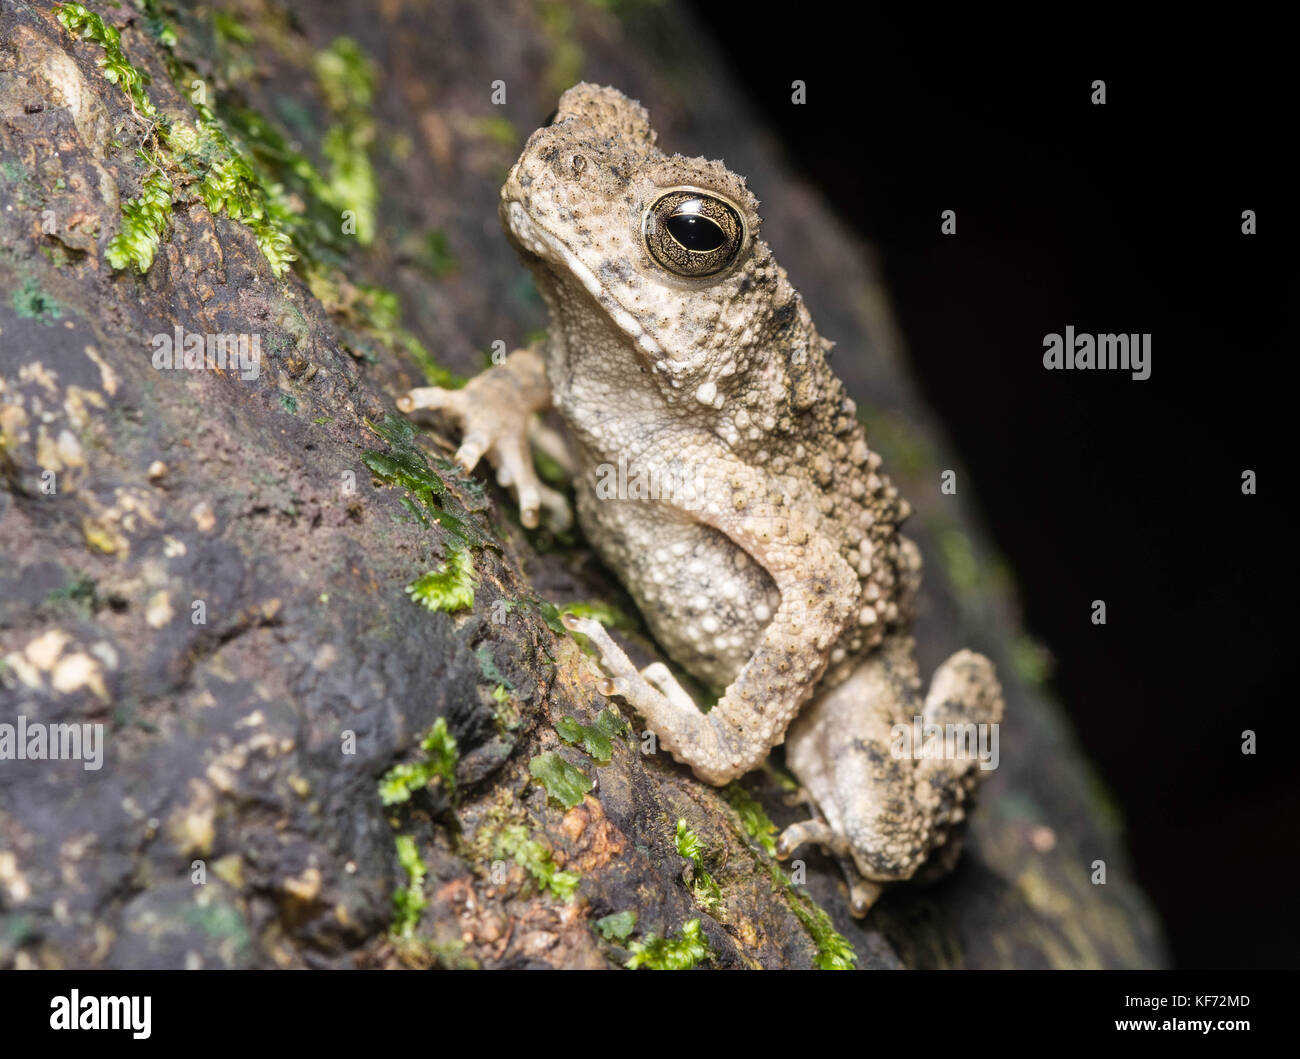 A juvenile river toad (Phrynoidis asper) from Borneo. Stock Photo